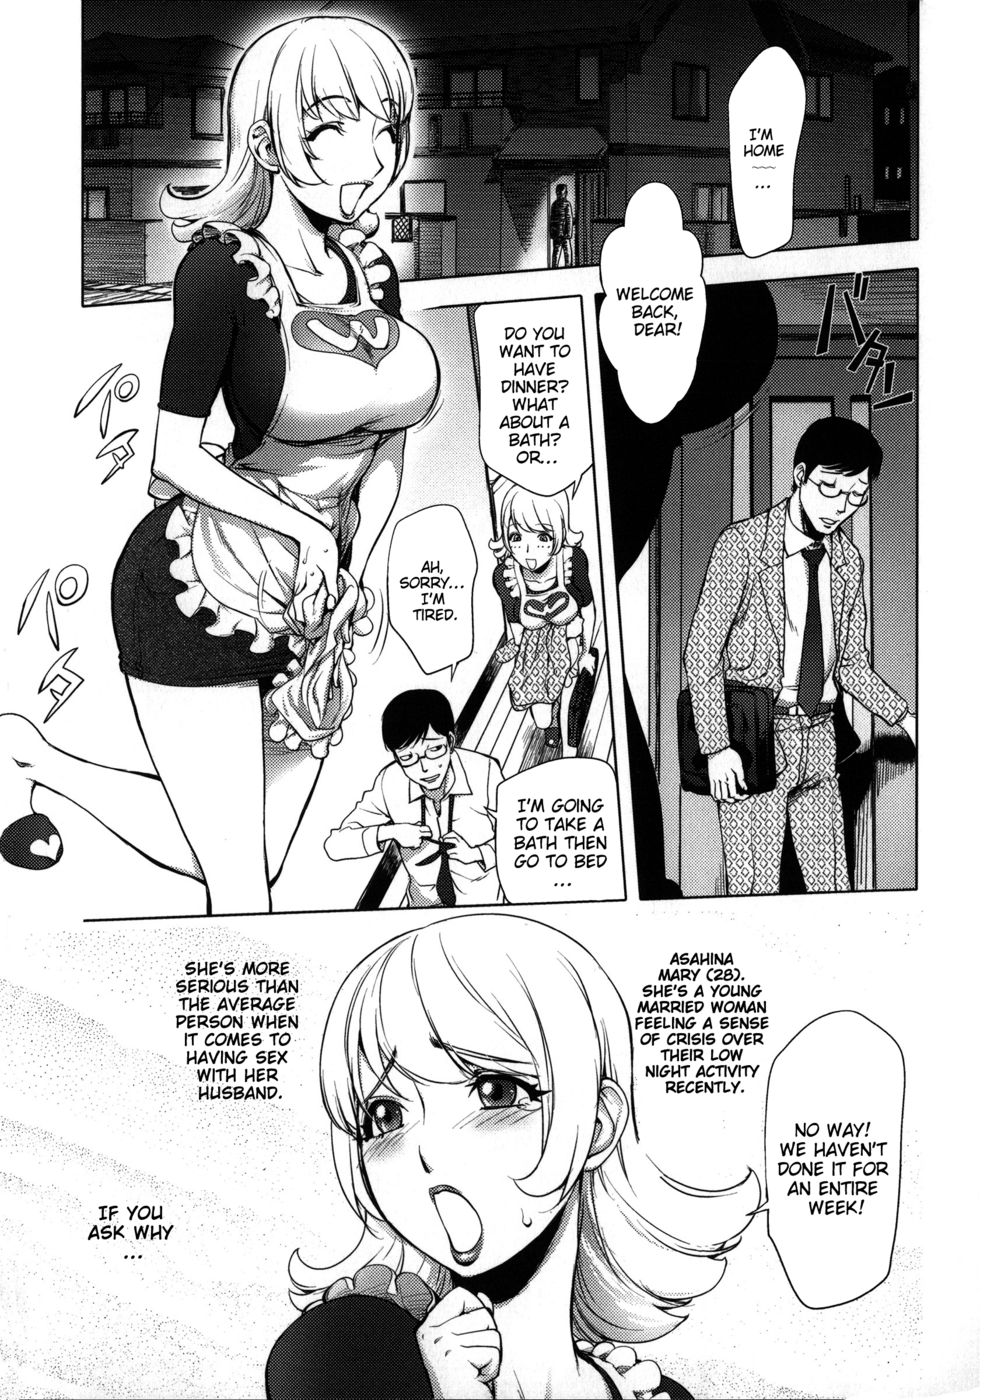 Hentai Manga Comic-Beloved Warrior Wife-Chapter 1 - Mighty wife 1-1